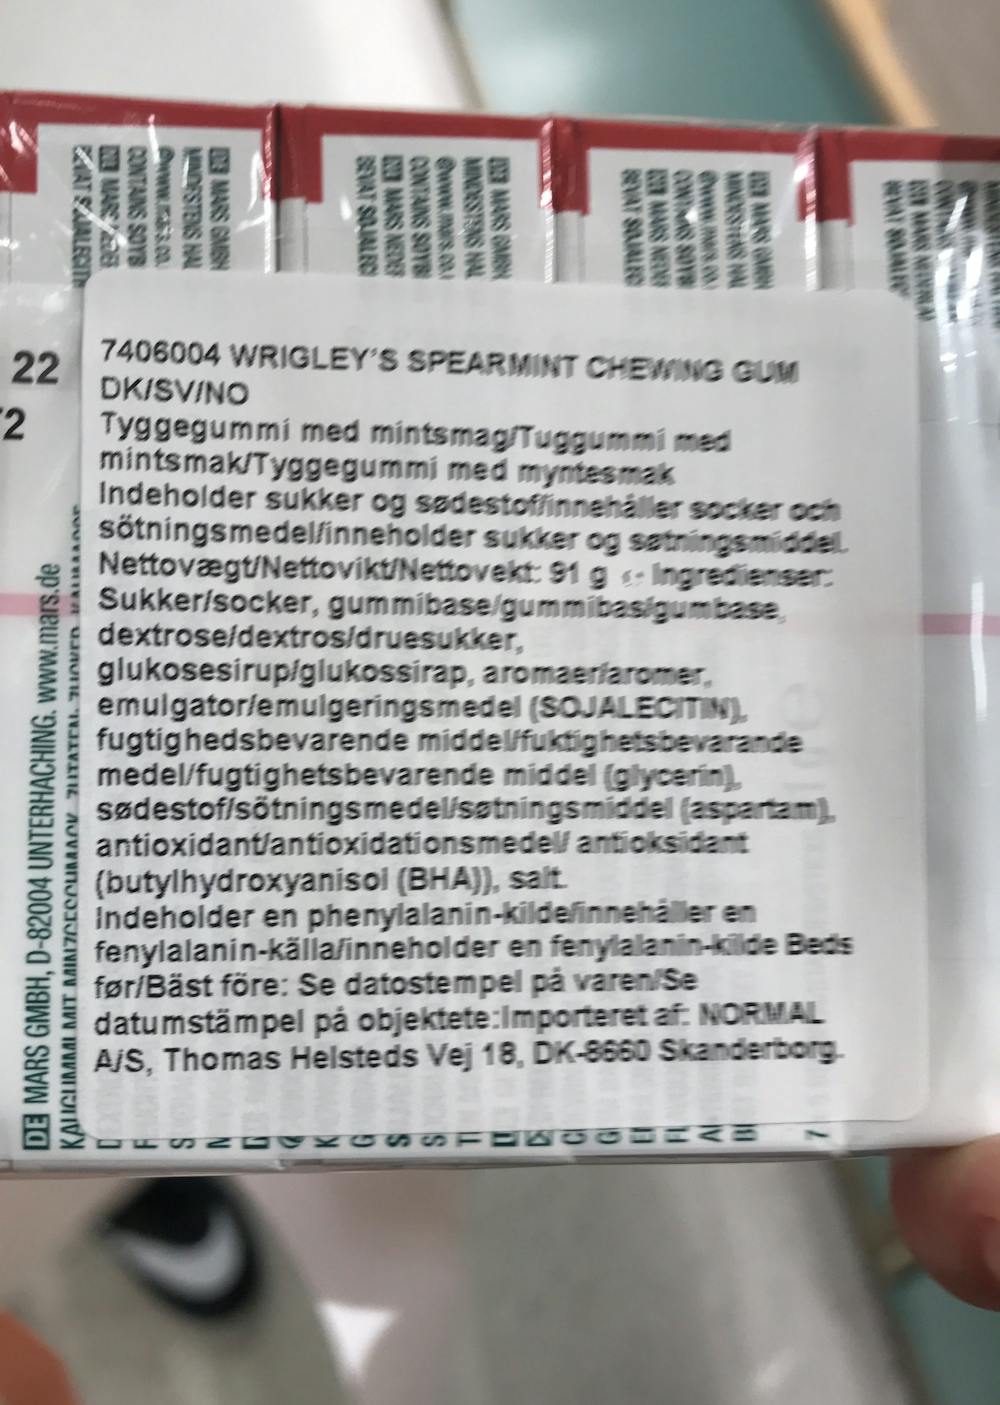 Ingrediensliste - Spearmint chewing gum, Wrigley's